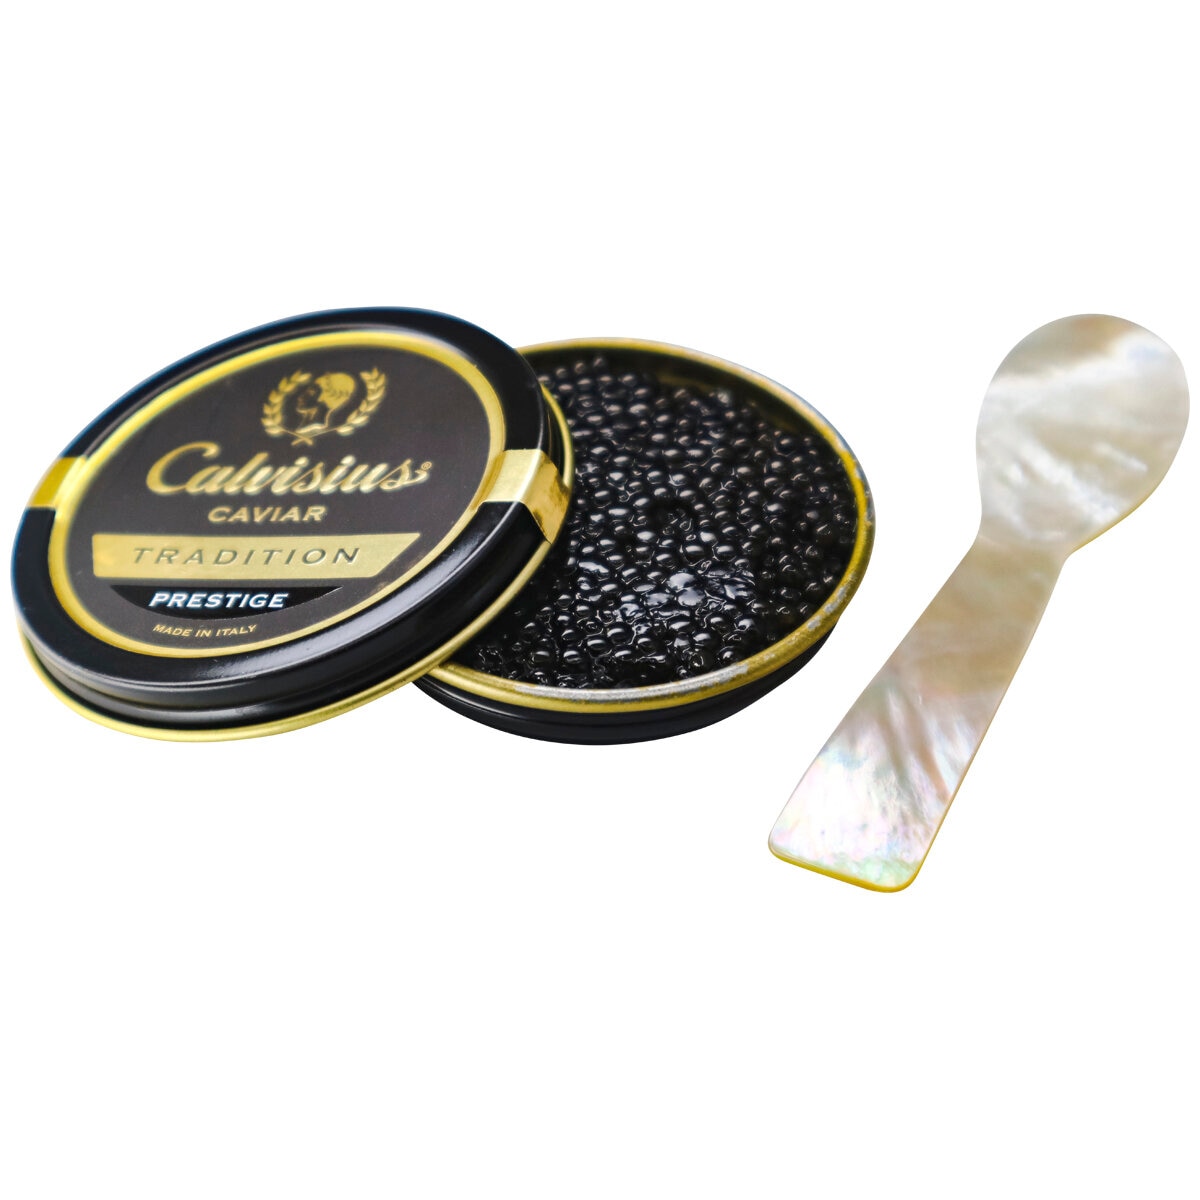 Calvisius Royal Caviar 30 gram